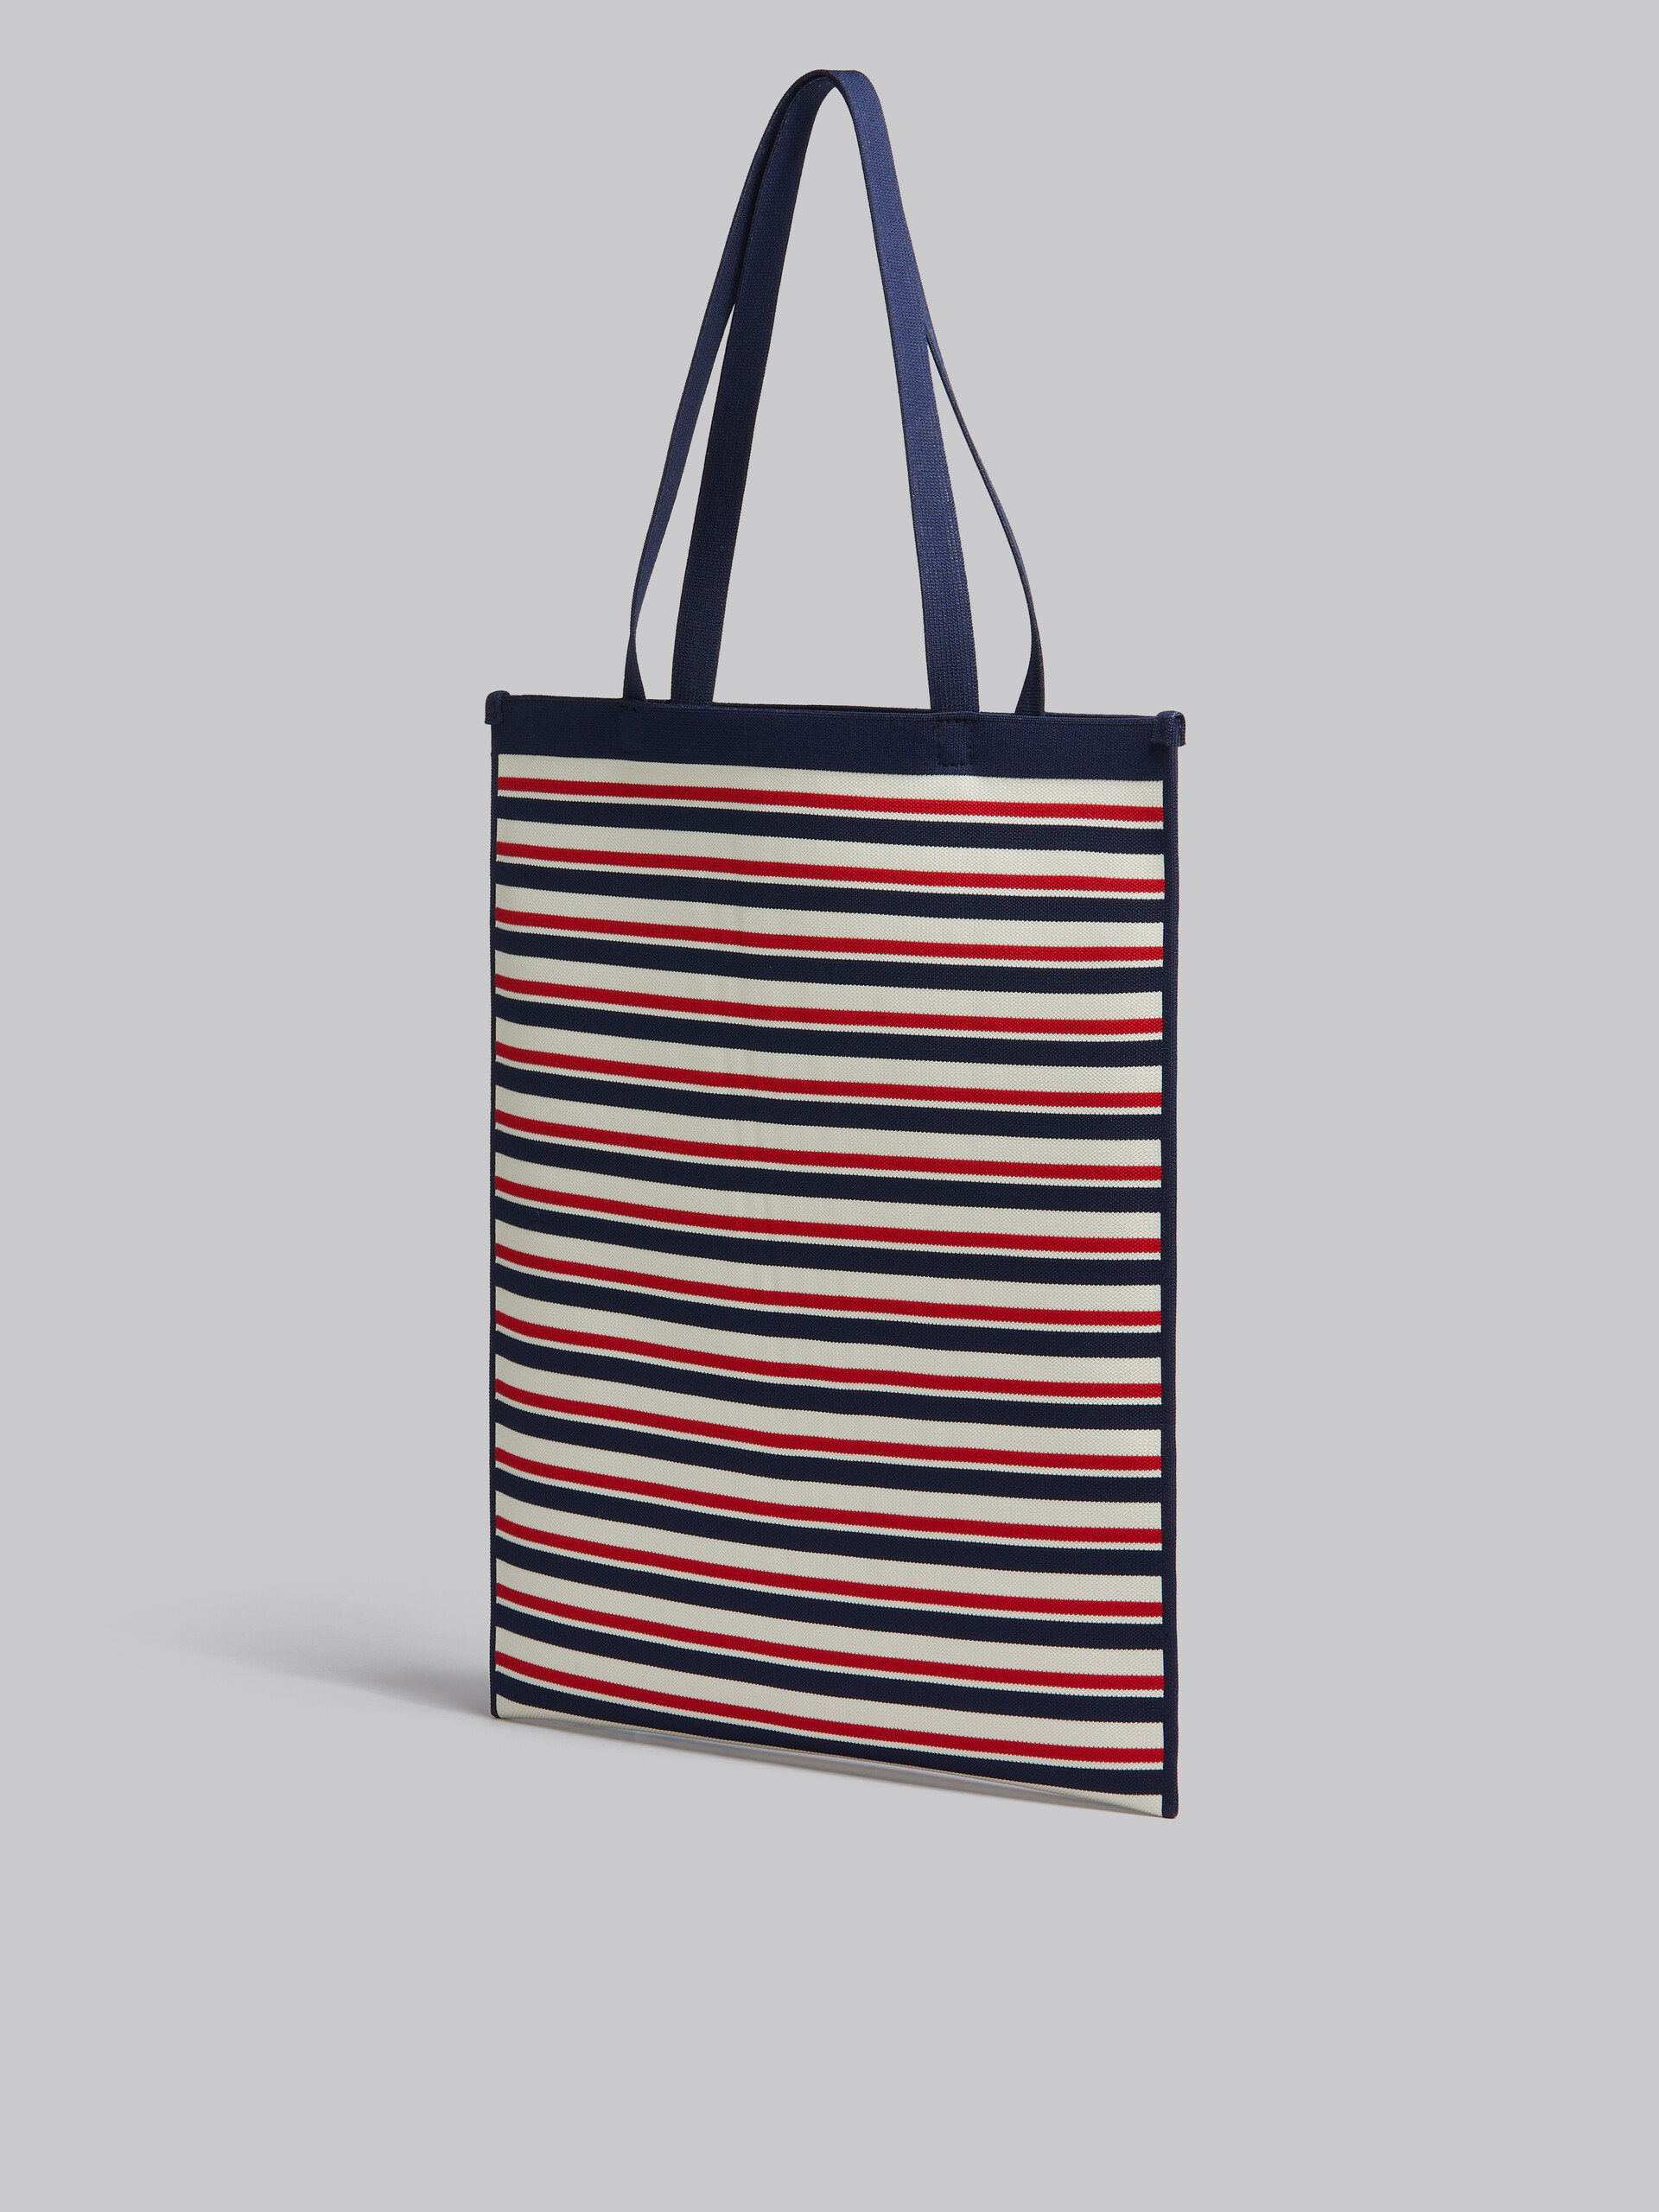 Tote Bag in jacquard a righe blu, bianche e rosse - Borse shopping - Image 3